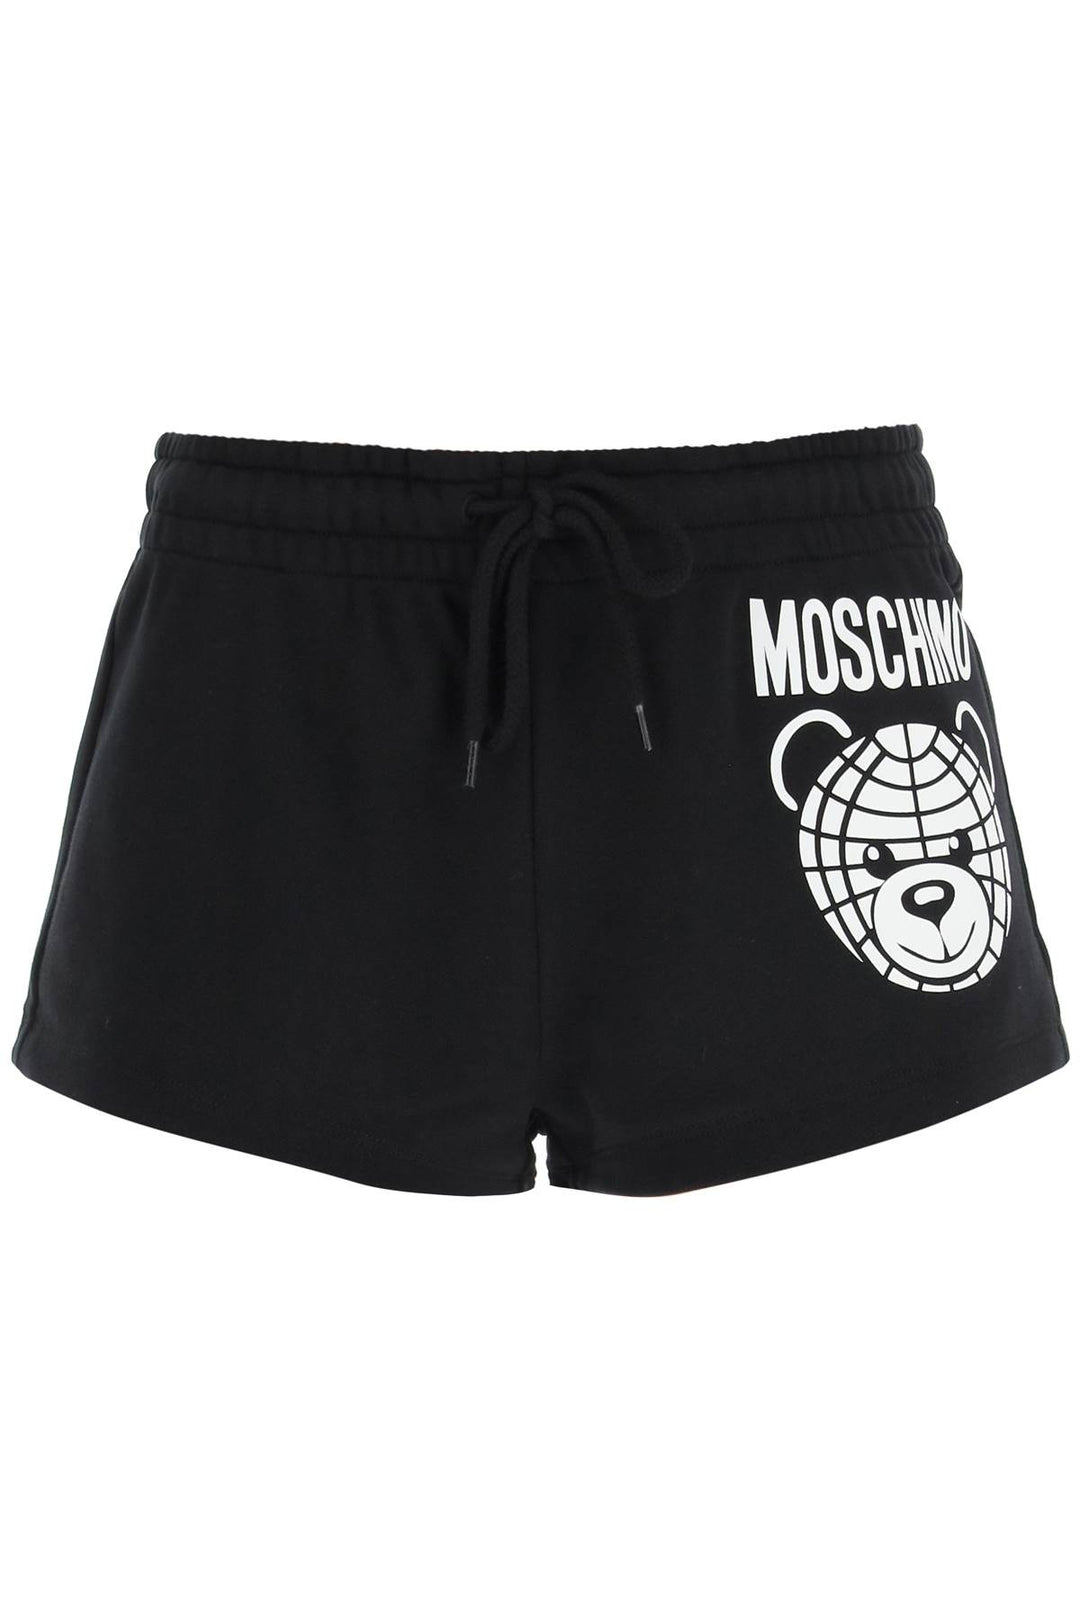 Moschino Sporty Shorts With Teddy Print   Nero